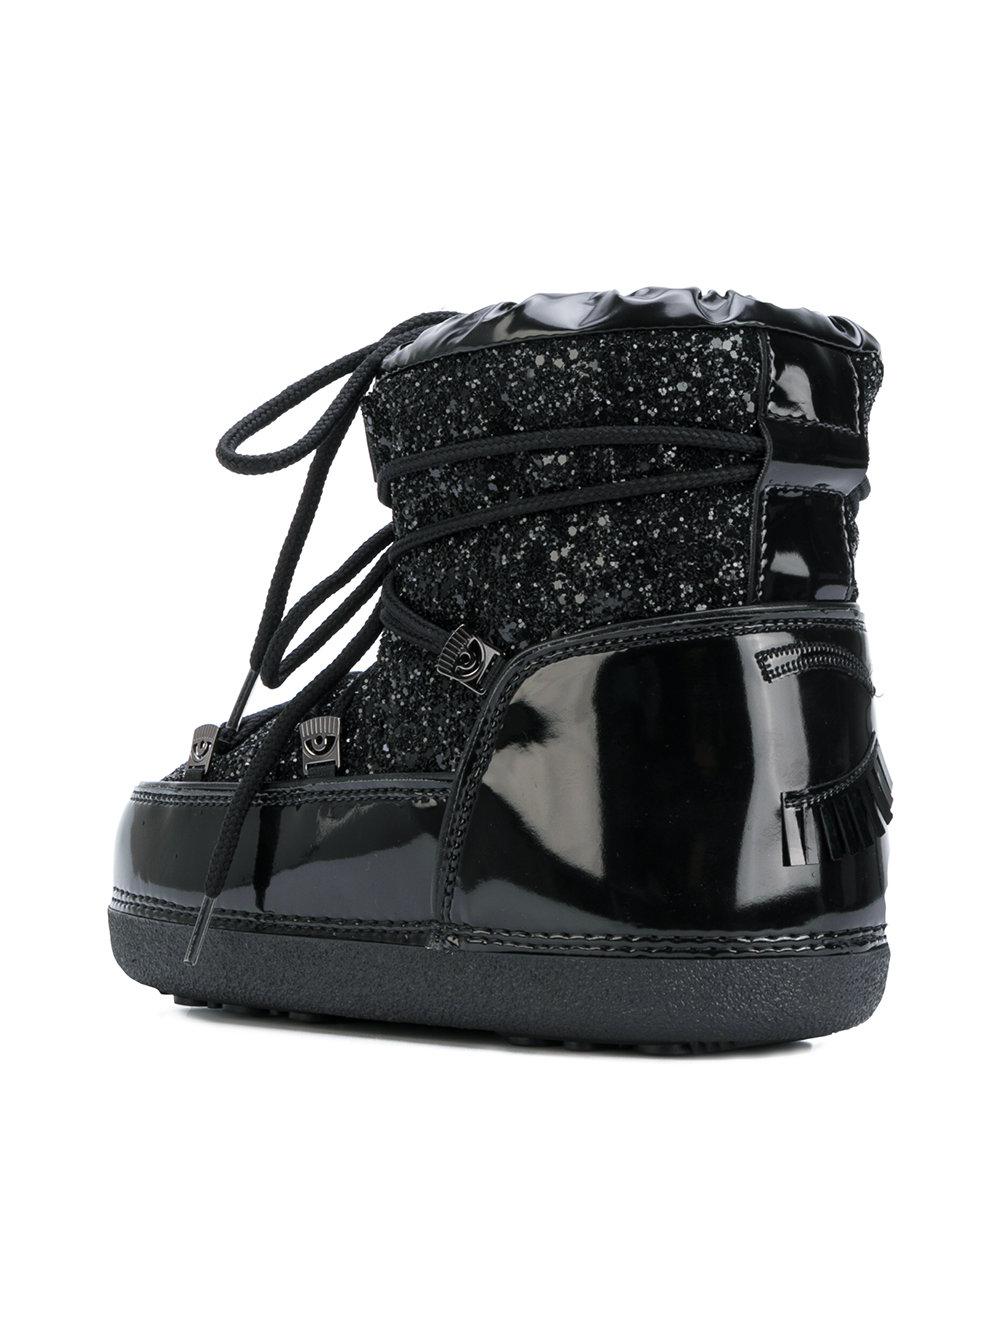 Chiara Ferragni Cotton Glitter Moon Boots in Black - Lyst